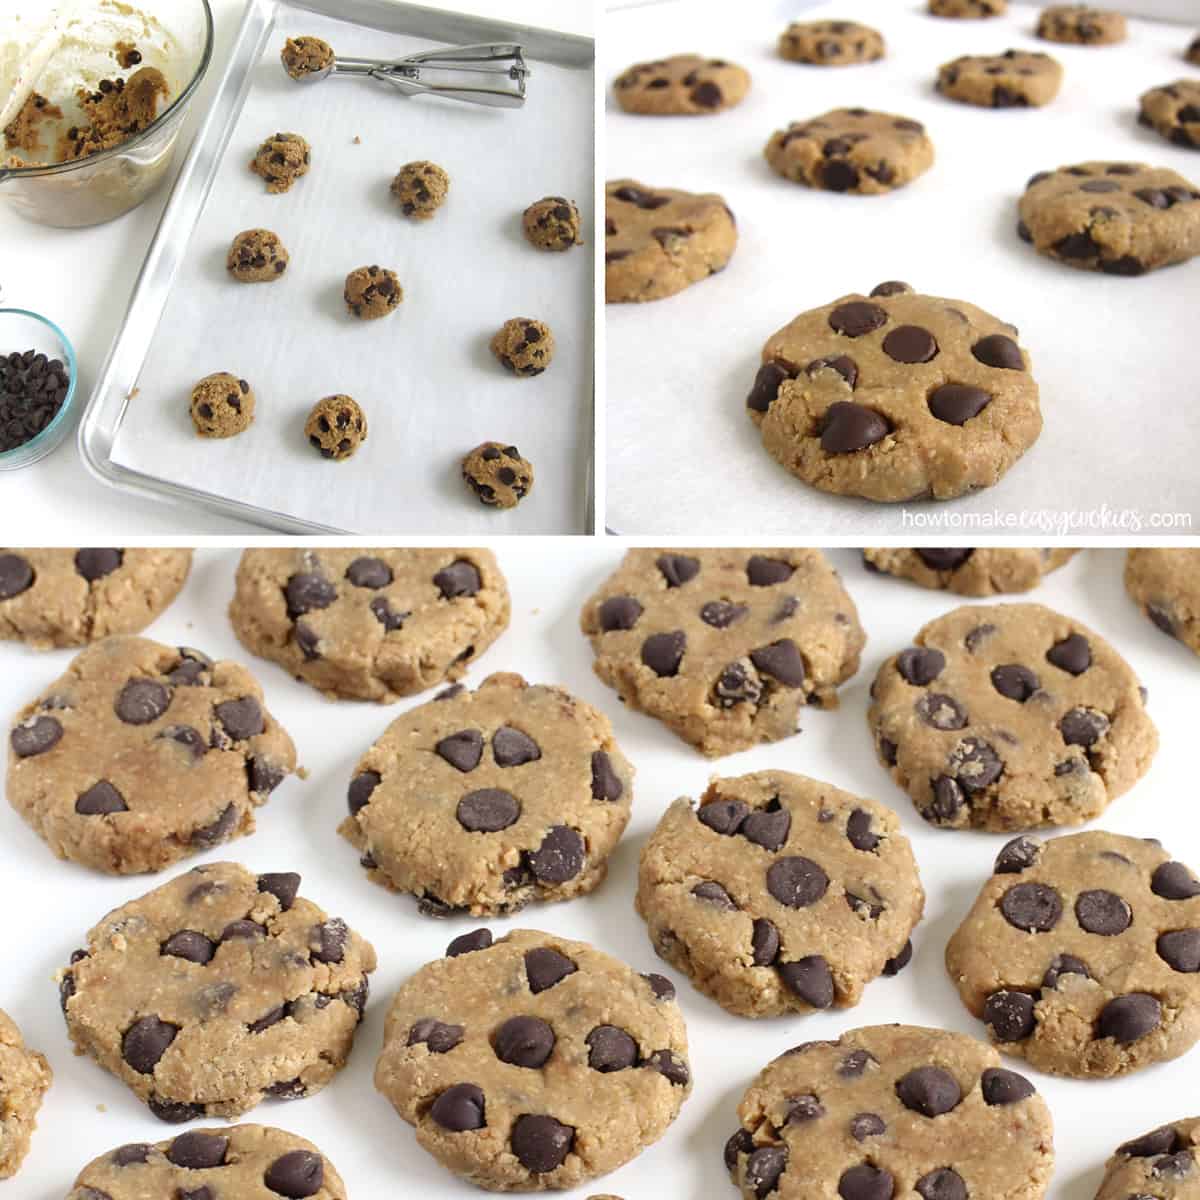 scoop then flatten the no-bake chocolate chip oatmeal cookies